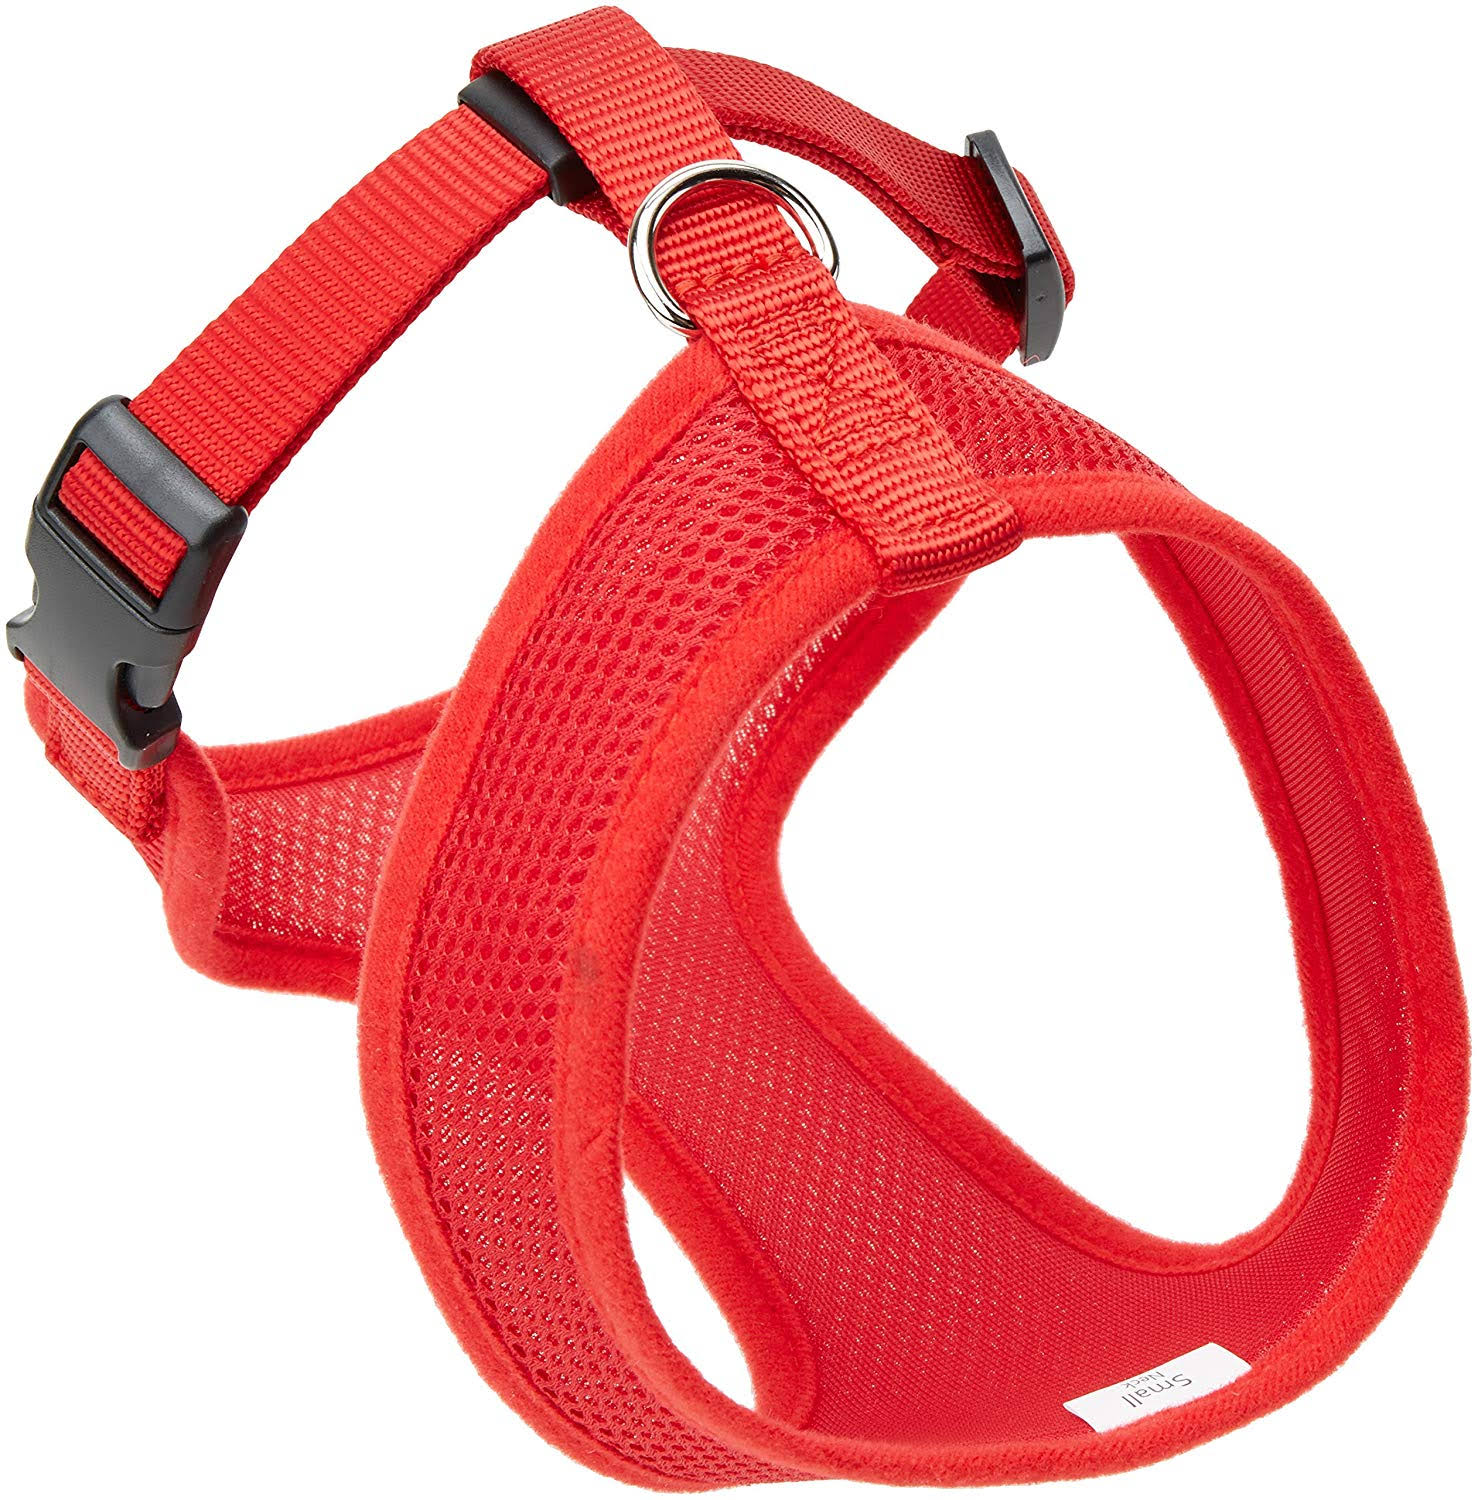 Coastal Comfort Dog Harness - Red, Small, Soft, Adjustable